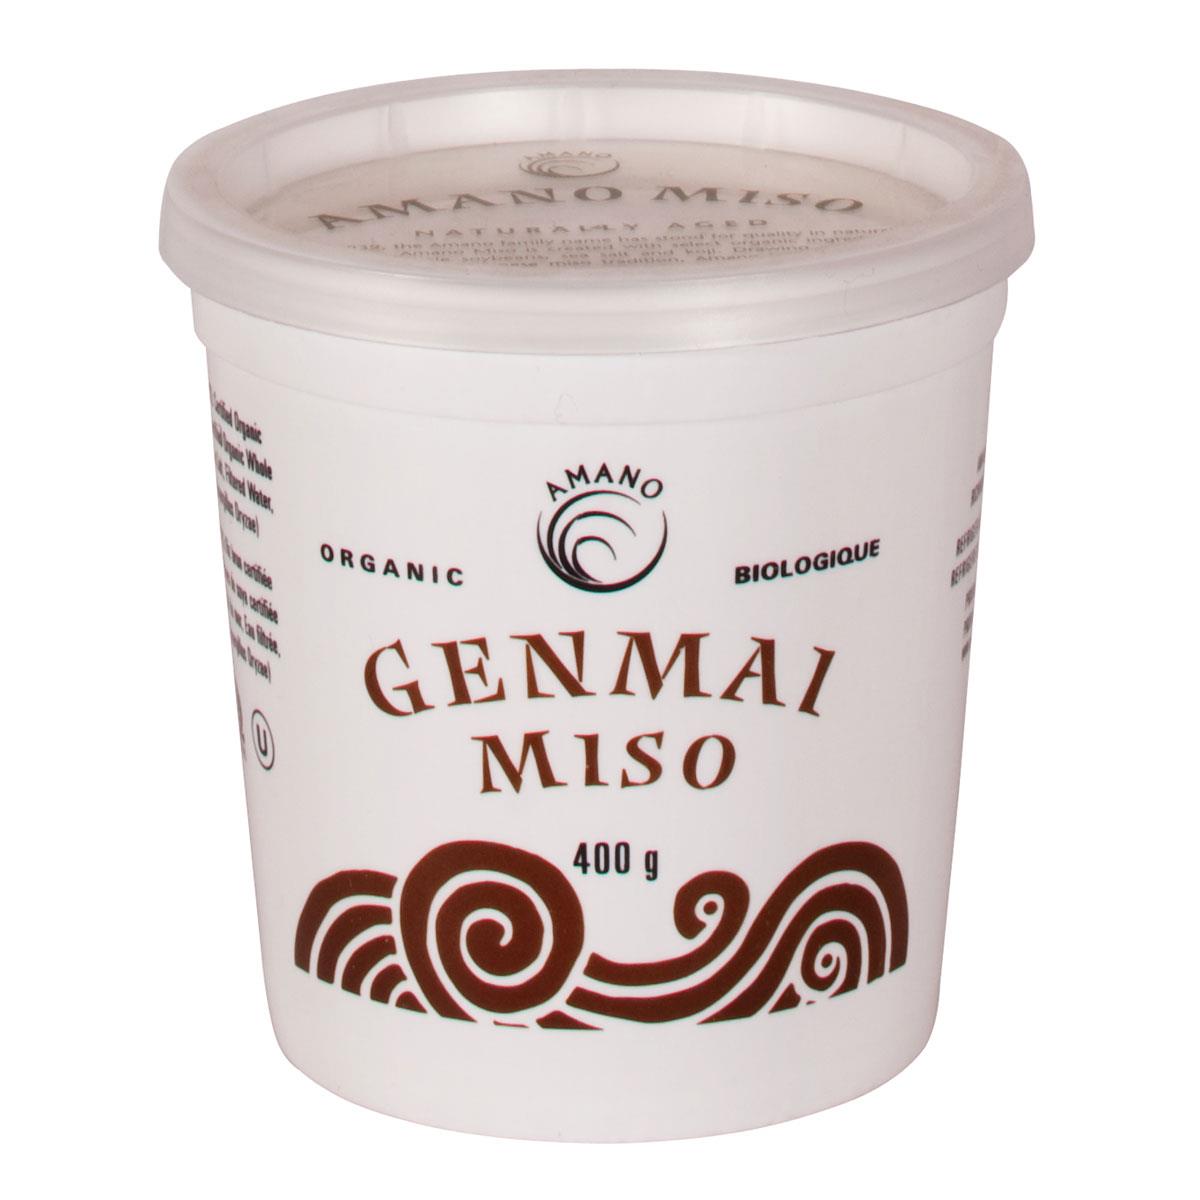 Homegrown Foods - Genmai Miso 400 g